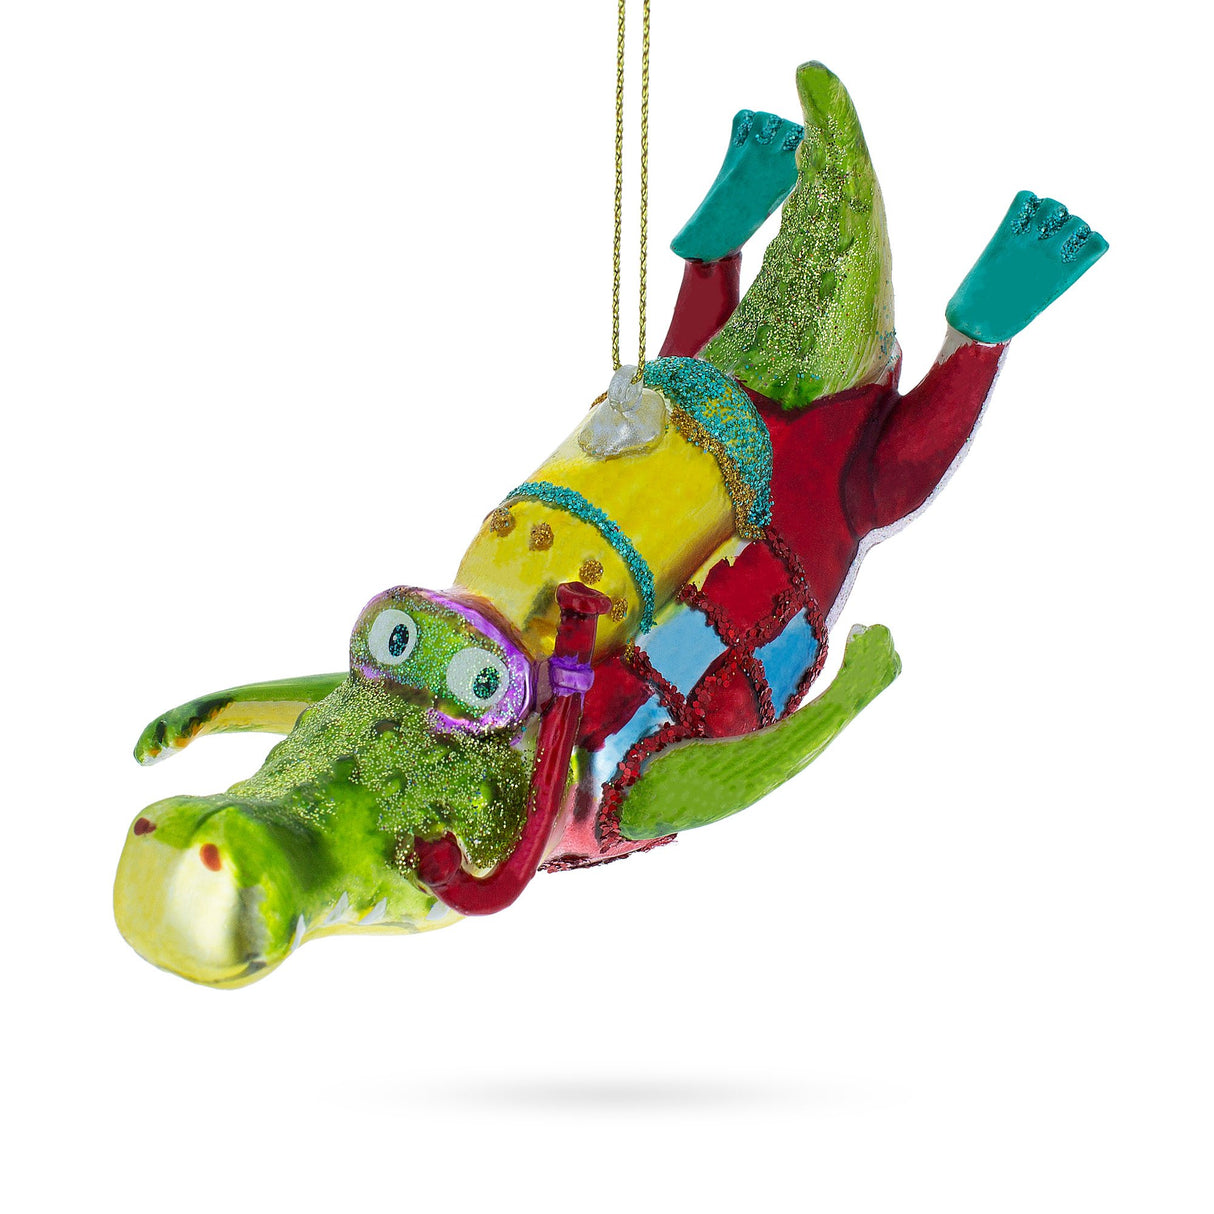 Glass Adventurous Alligator as a Scuba Diver - Blown Glass Christmas Ornament in Green color